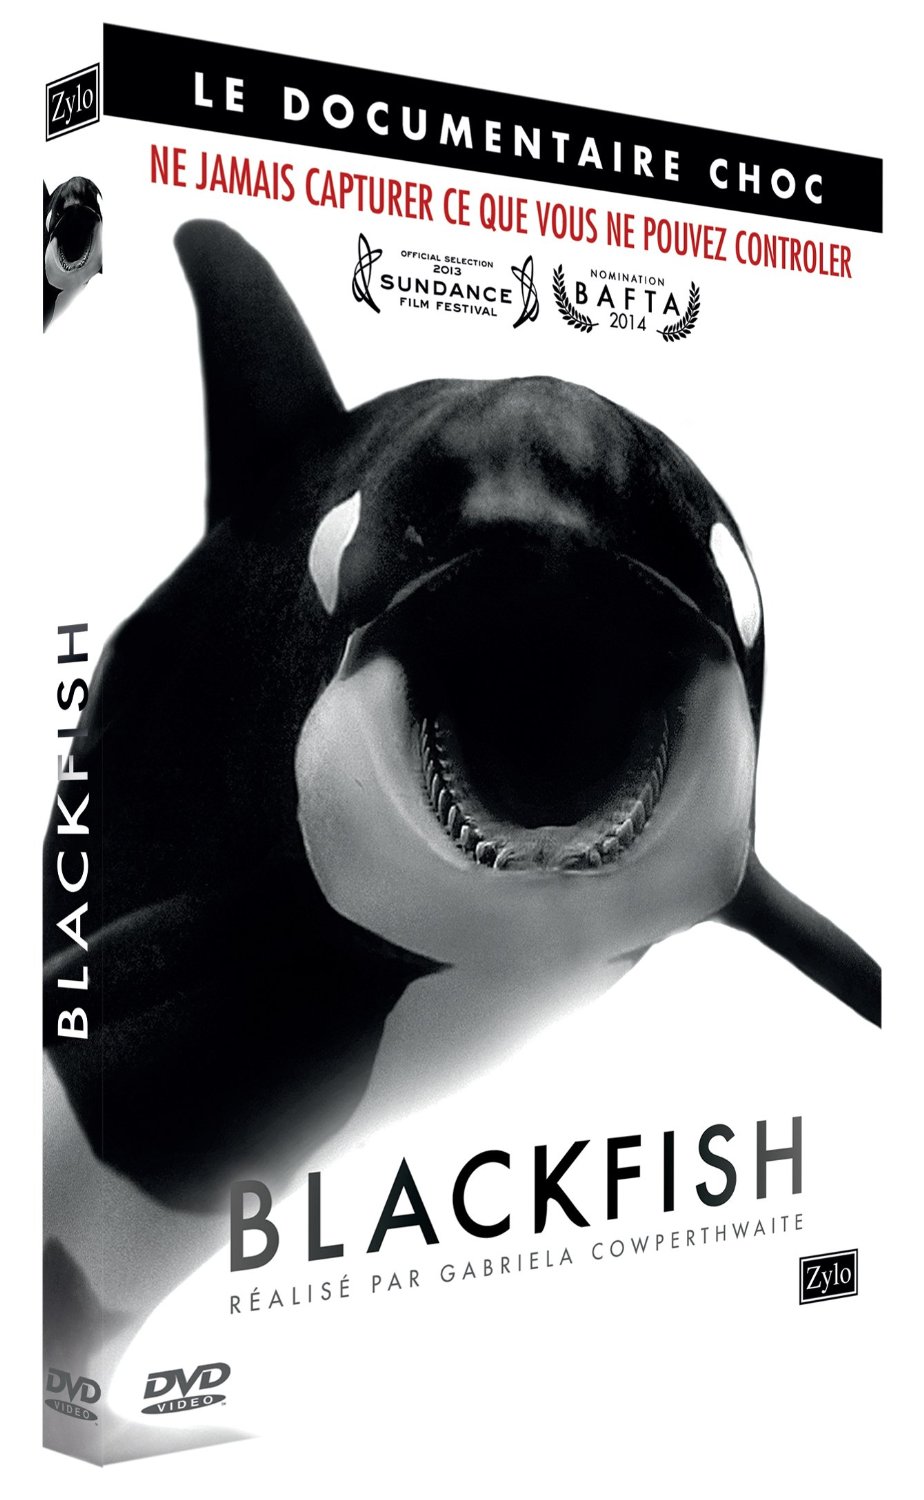 BlackFish